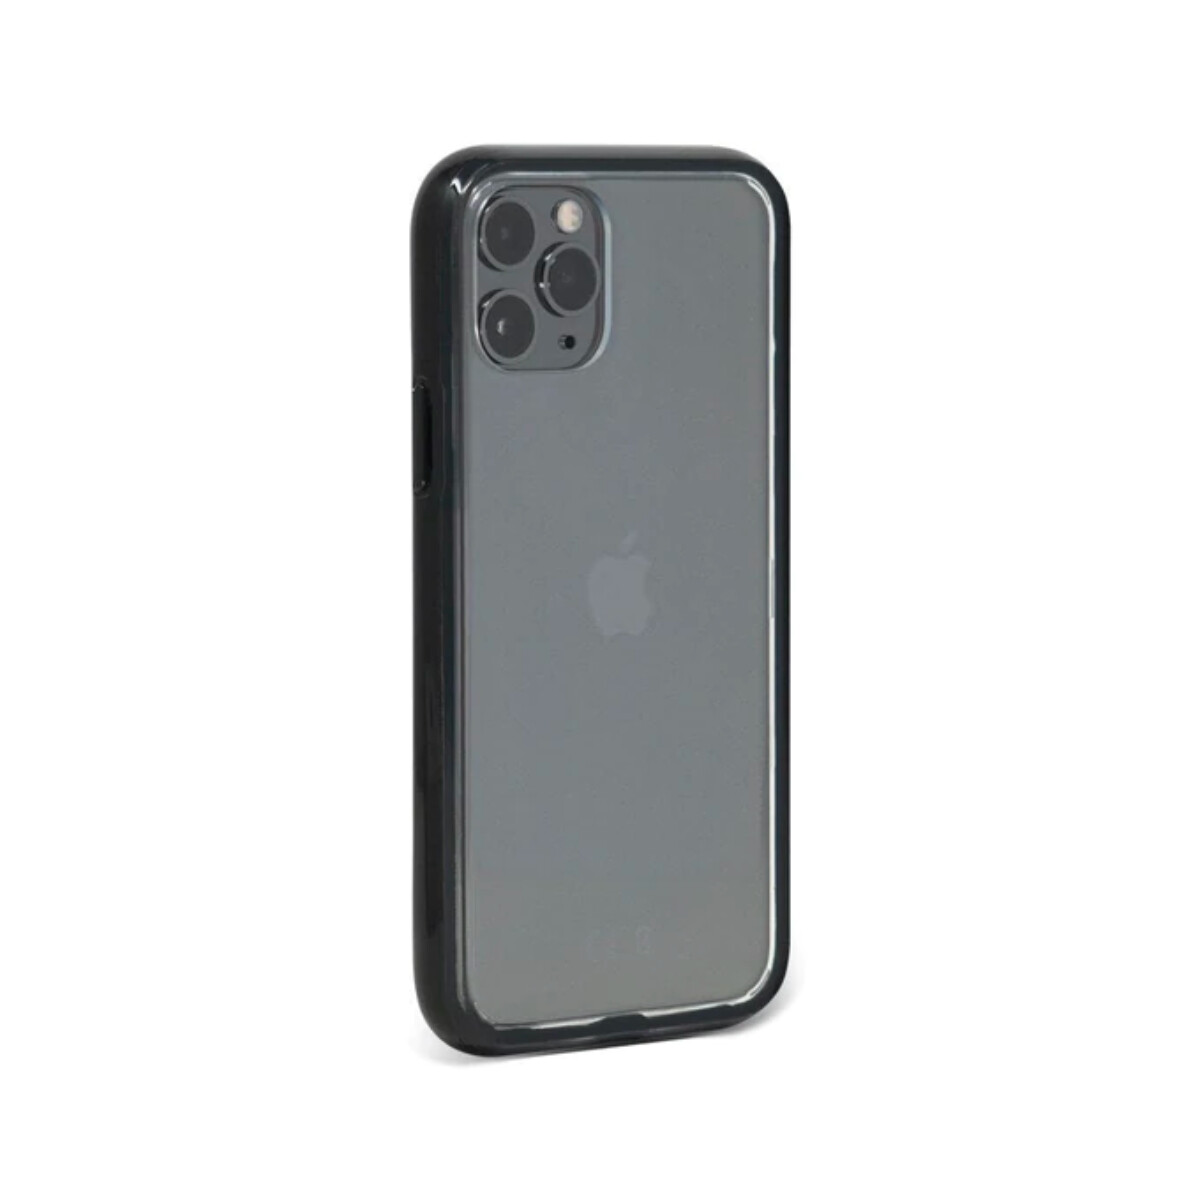 Mous case clarity iphone 12 y iphone 12 pro - Transparente 